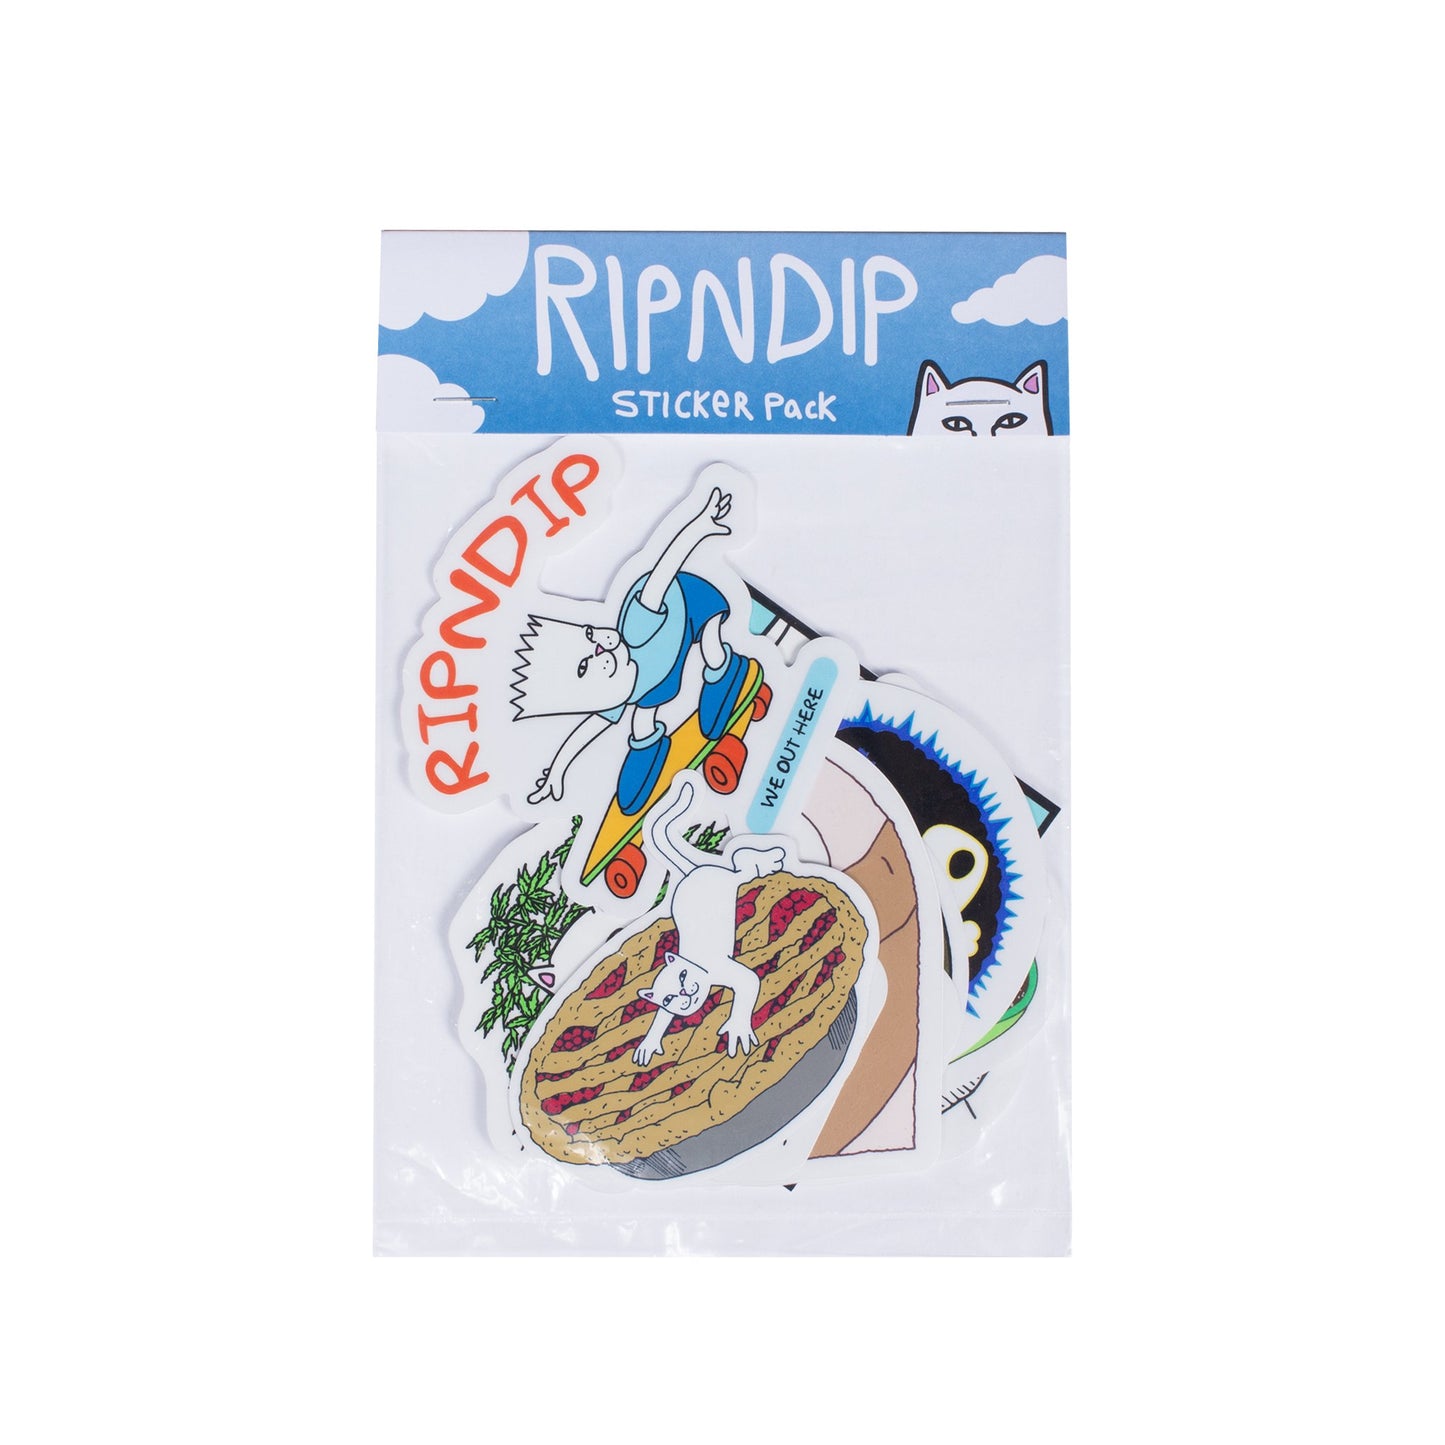 RIPNDIP - Fall 2017 Sticker Pack - The Giant Peach